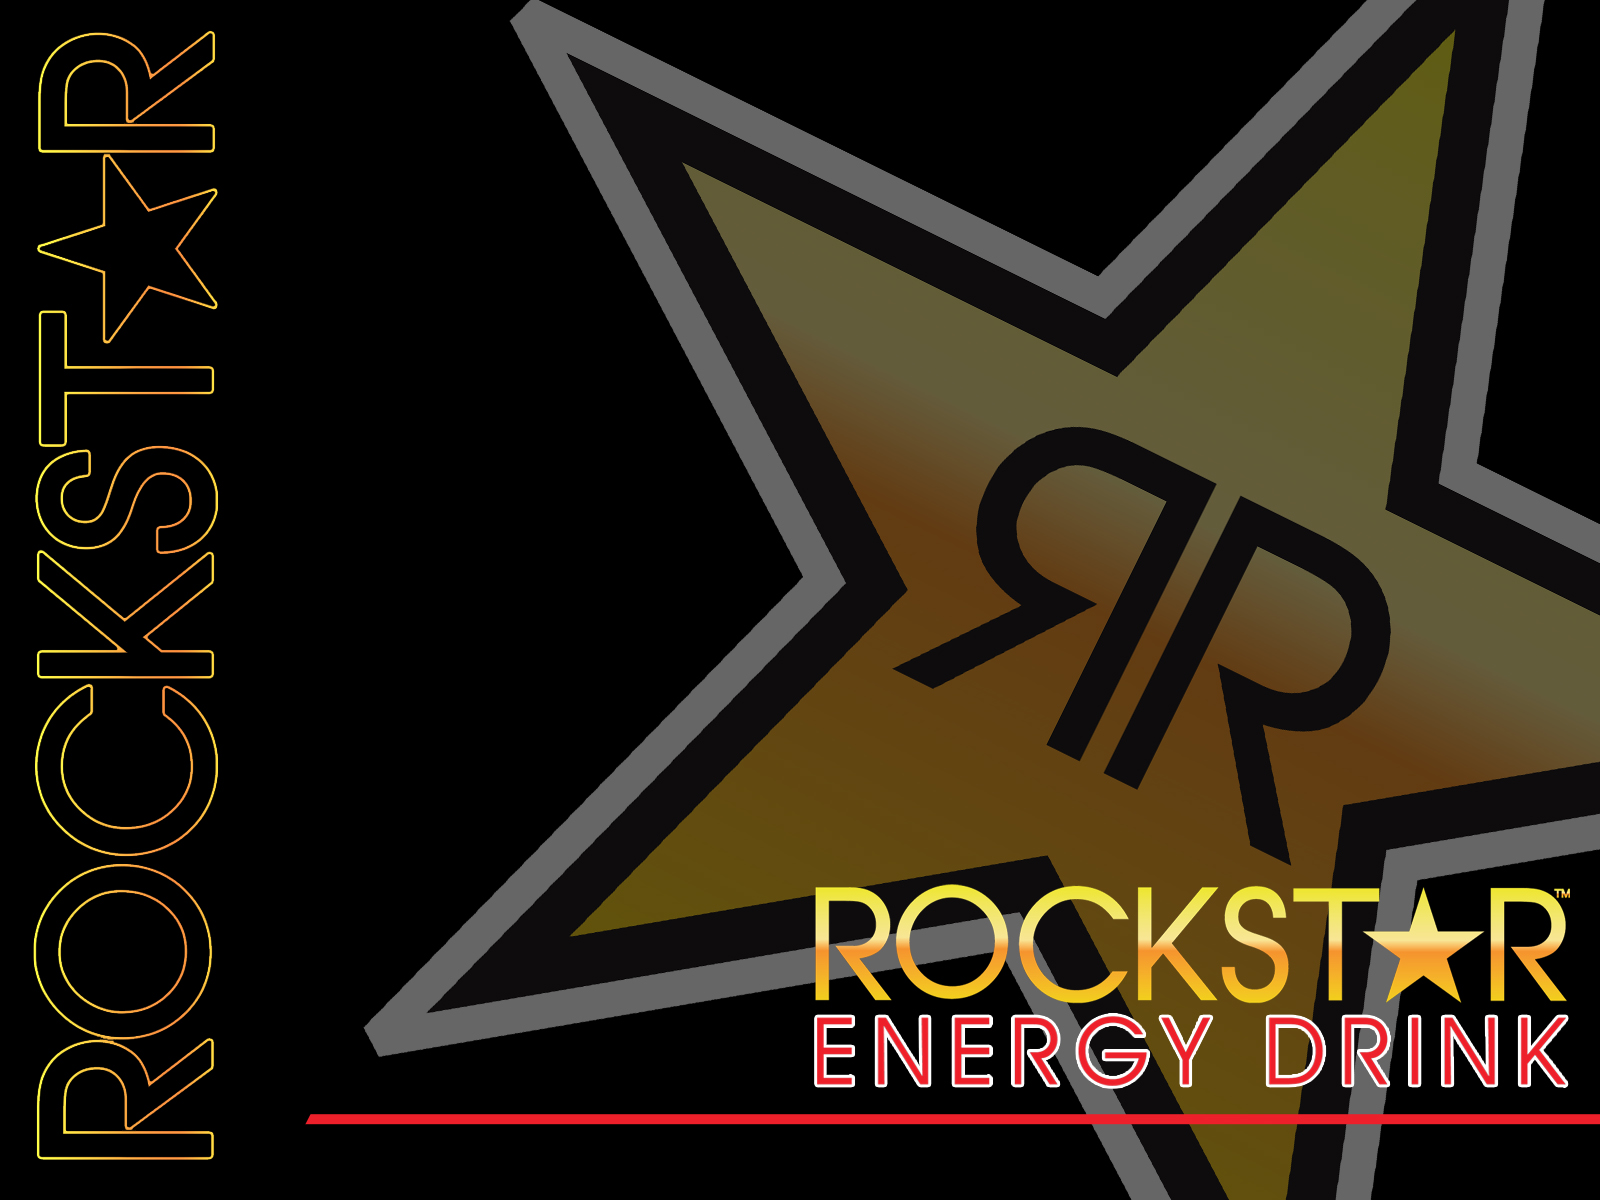 Rockstar Energy Drink Wallpaper HD Widescreen For PC Computer